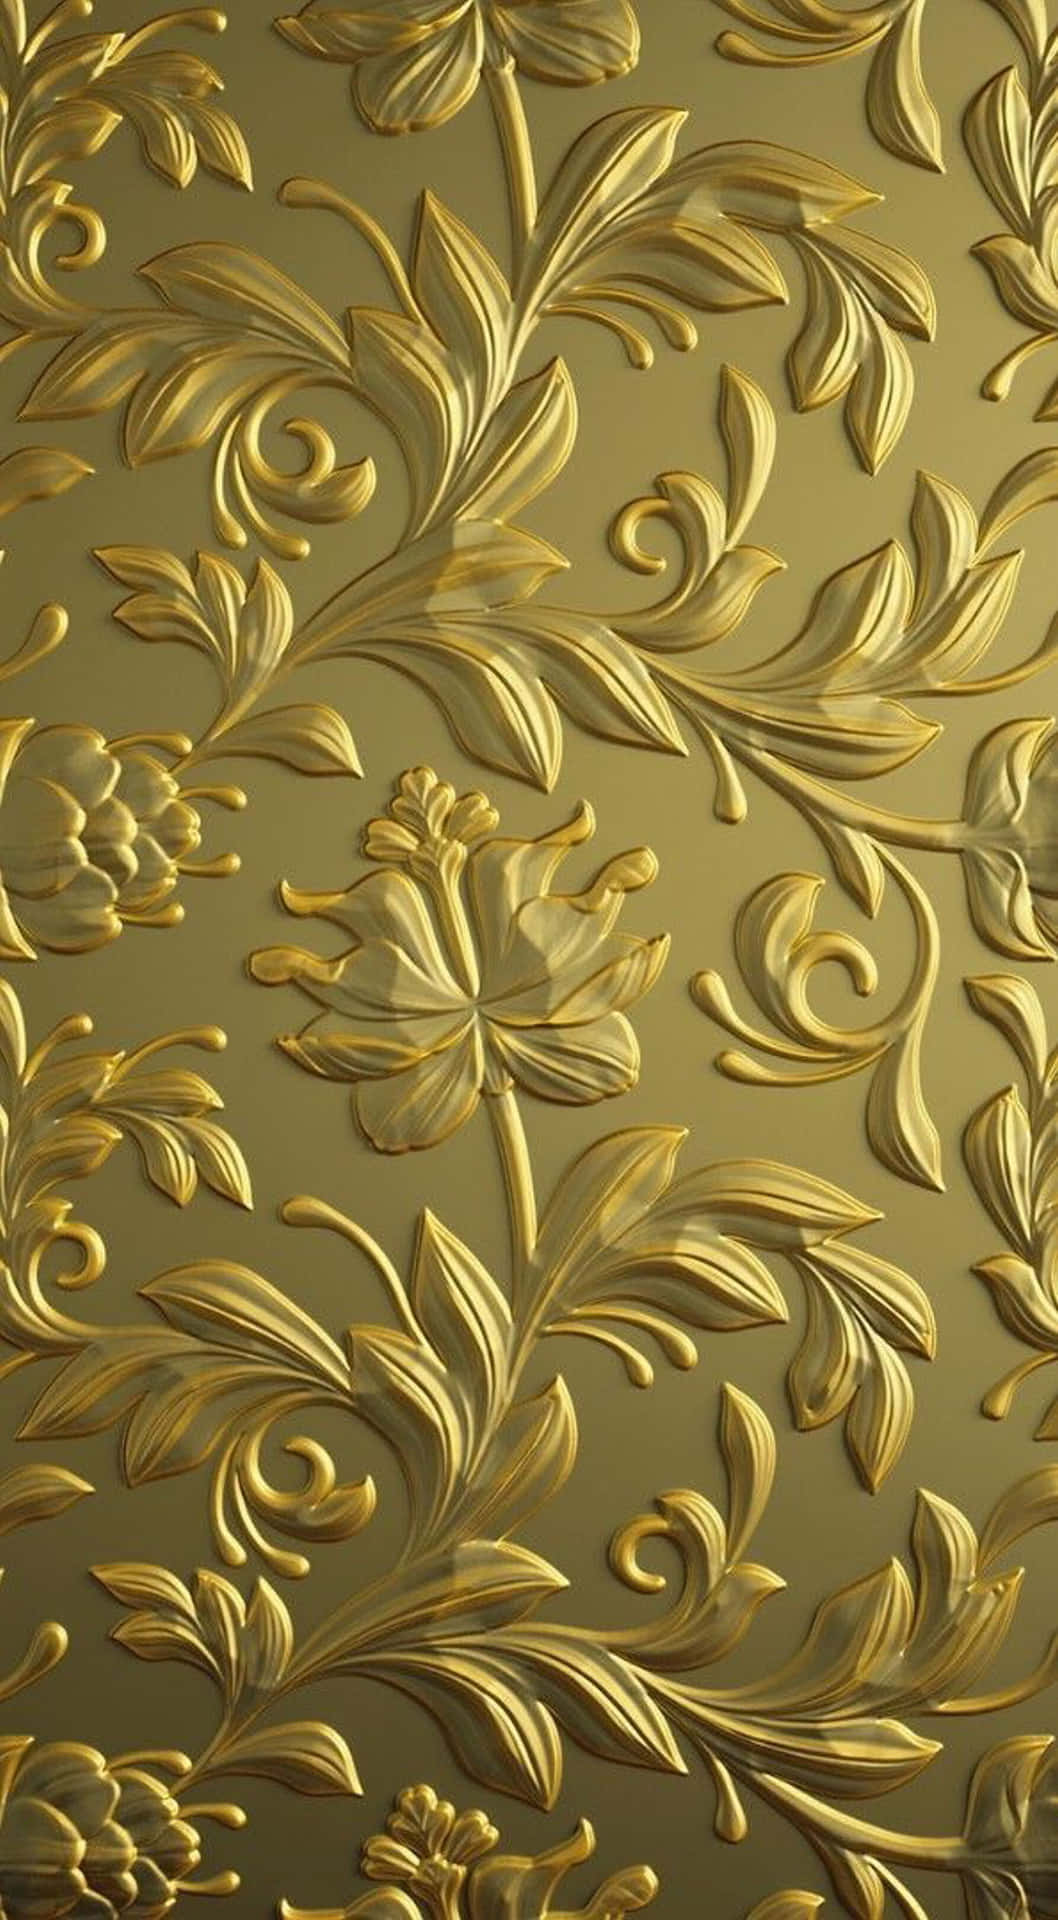 Luxurious Golden Swirls